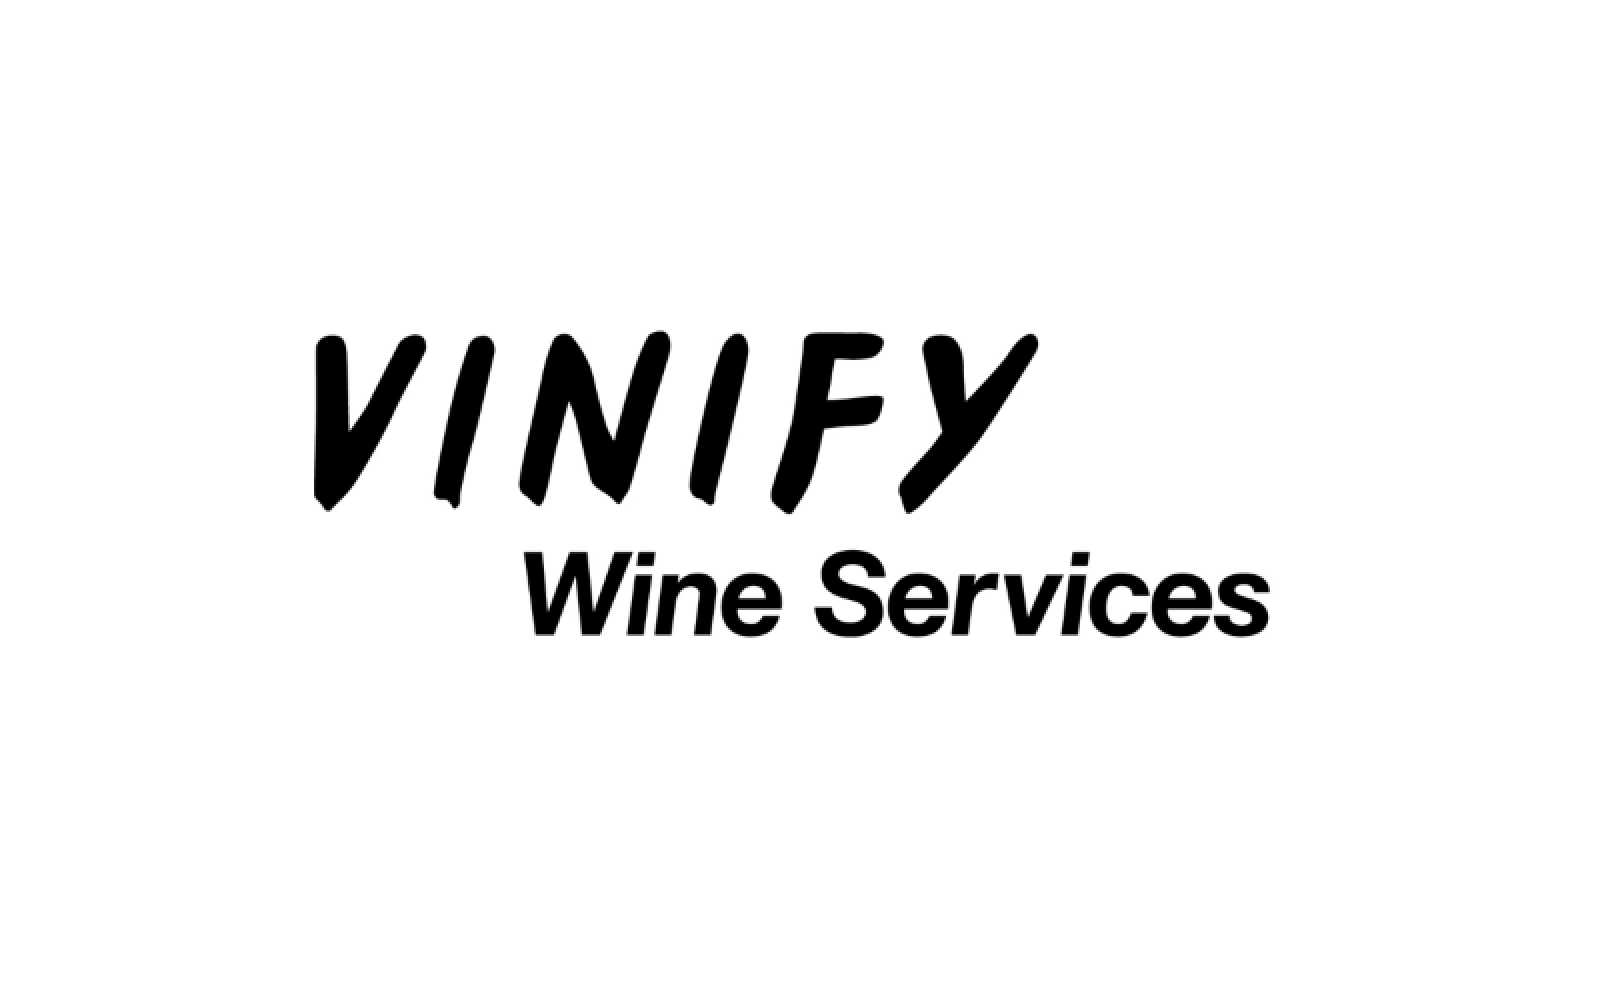 Vinify Wine Services